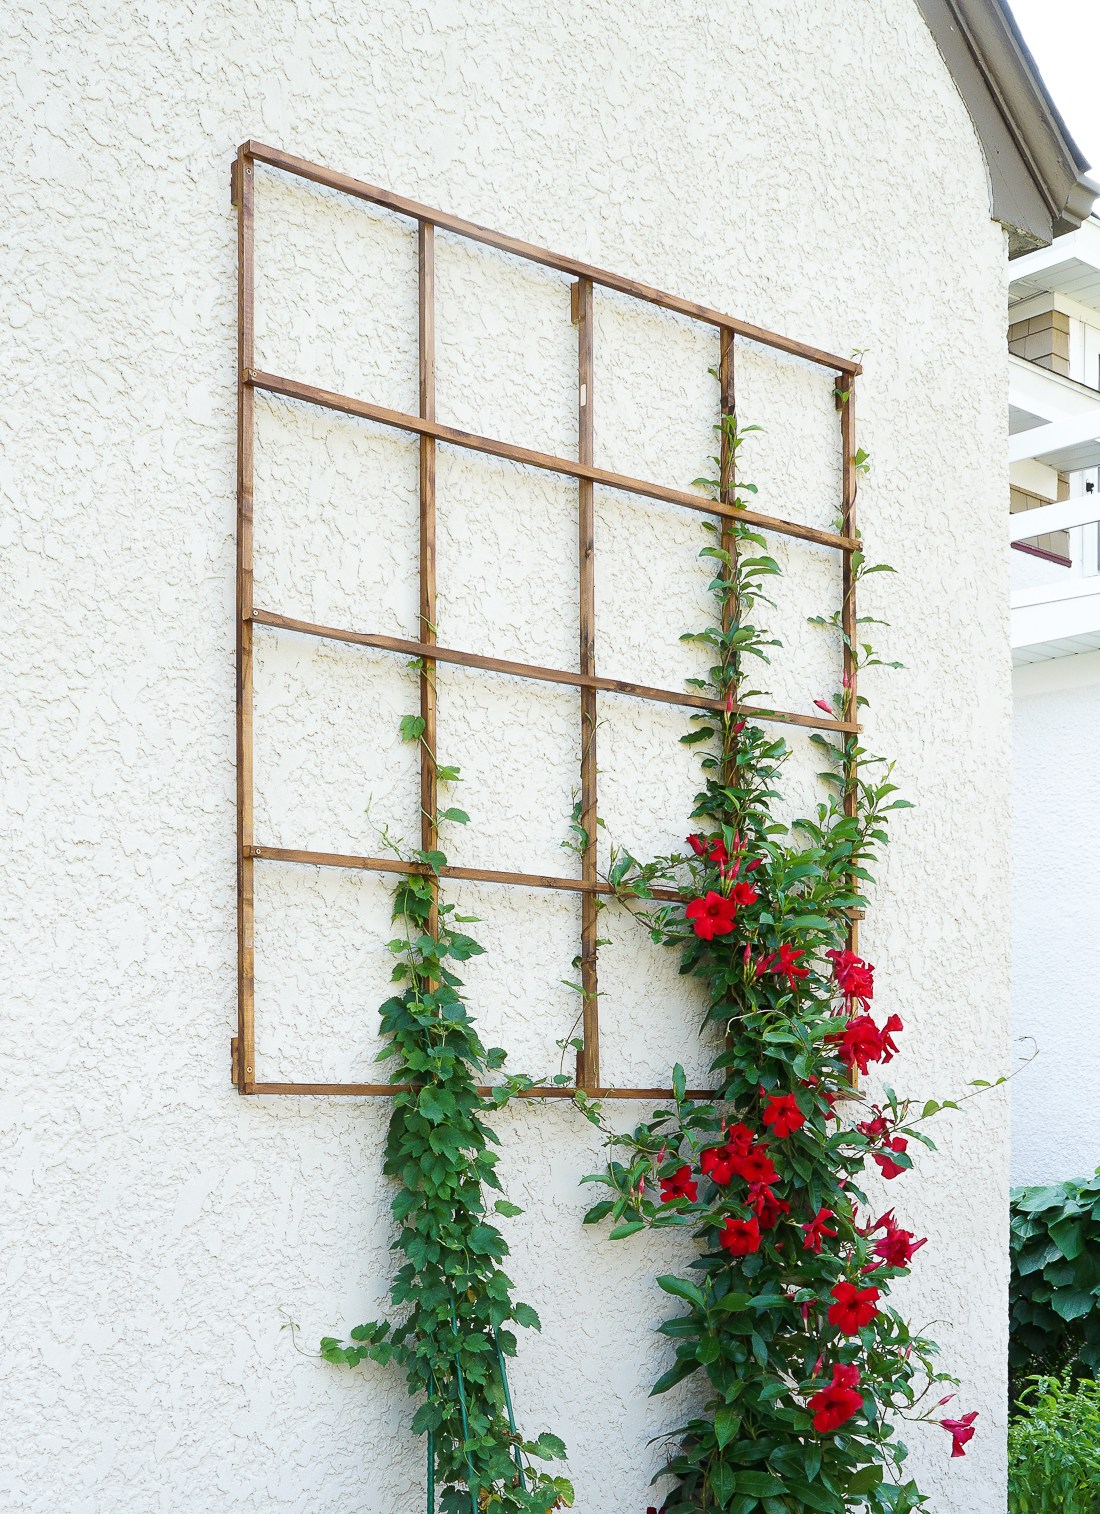 DIY wall mounted wood garden trellis